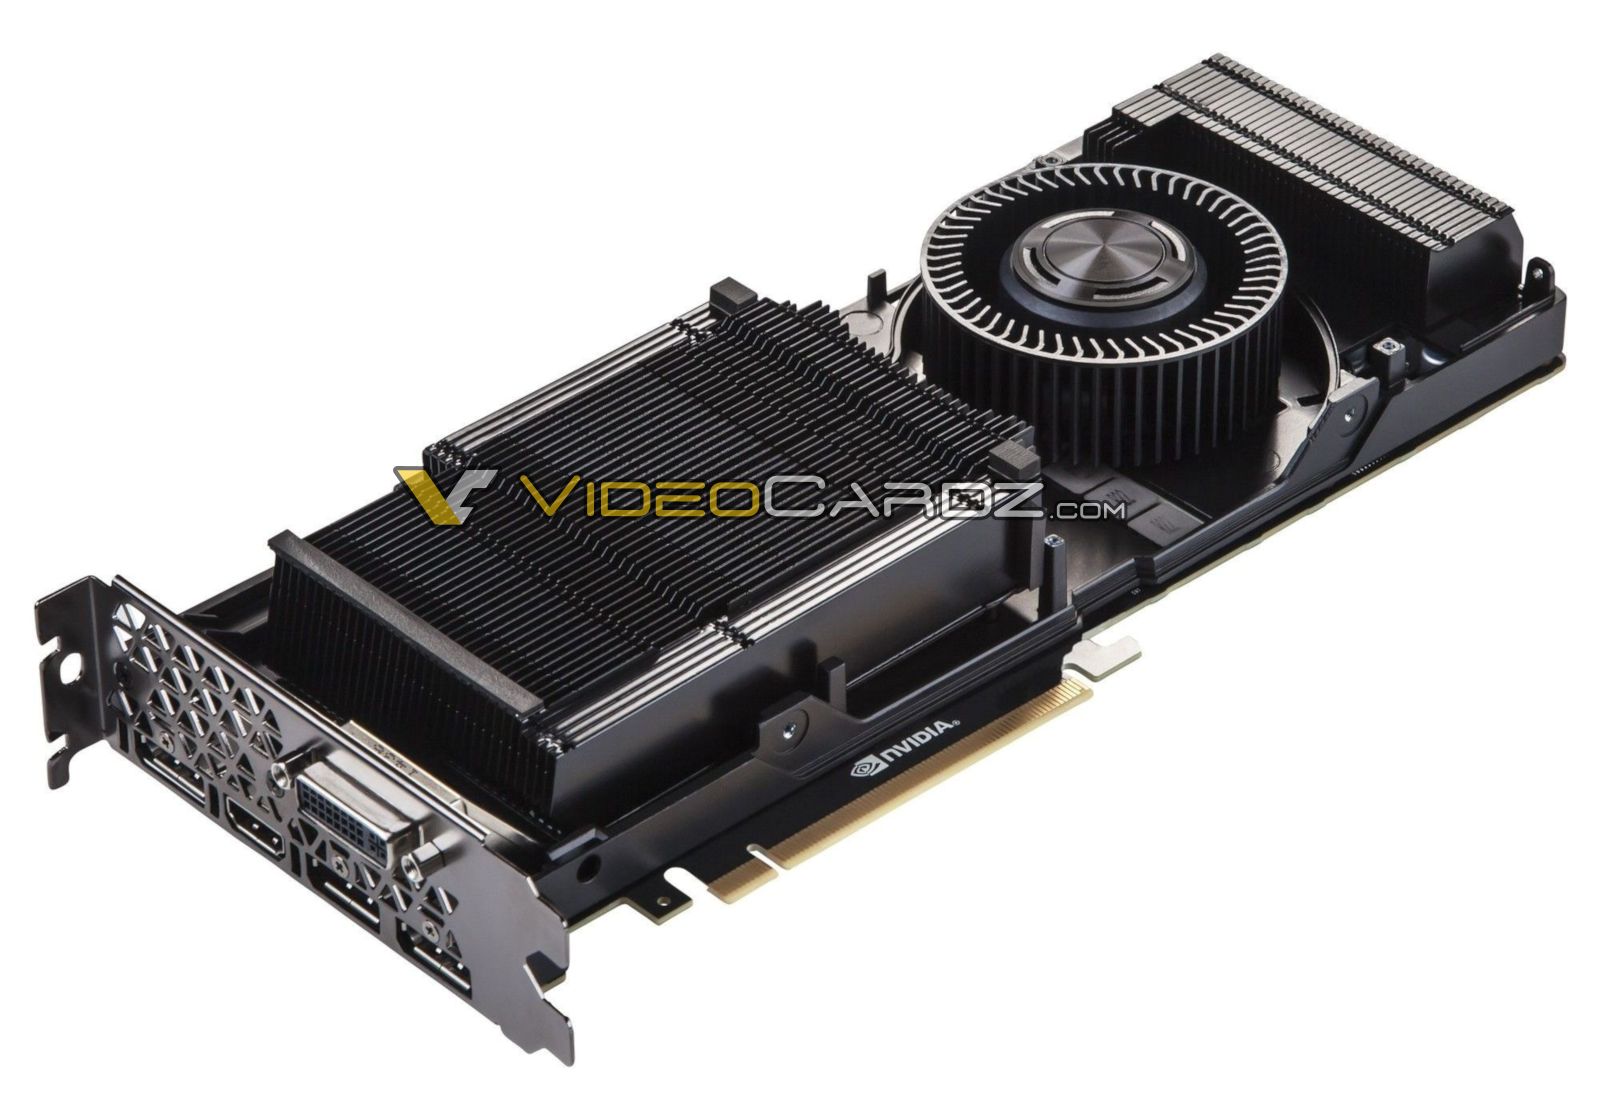 NVIDIA GeForce GTX TITAN X specifications | VideoCardz.com